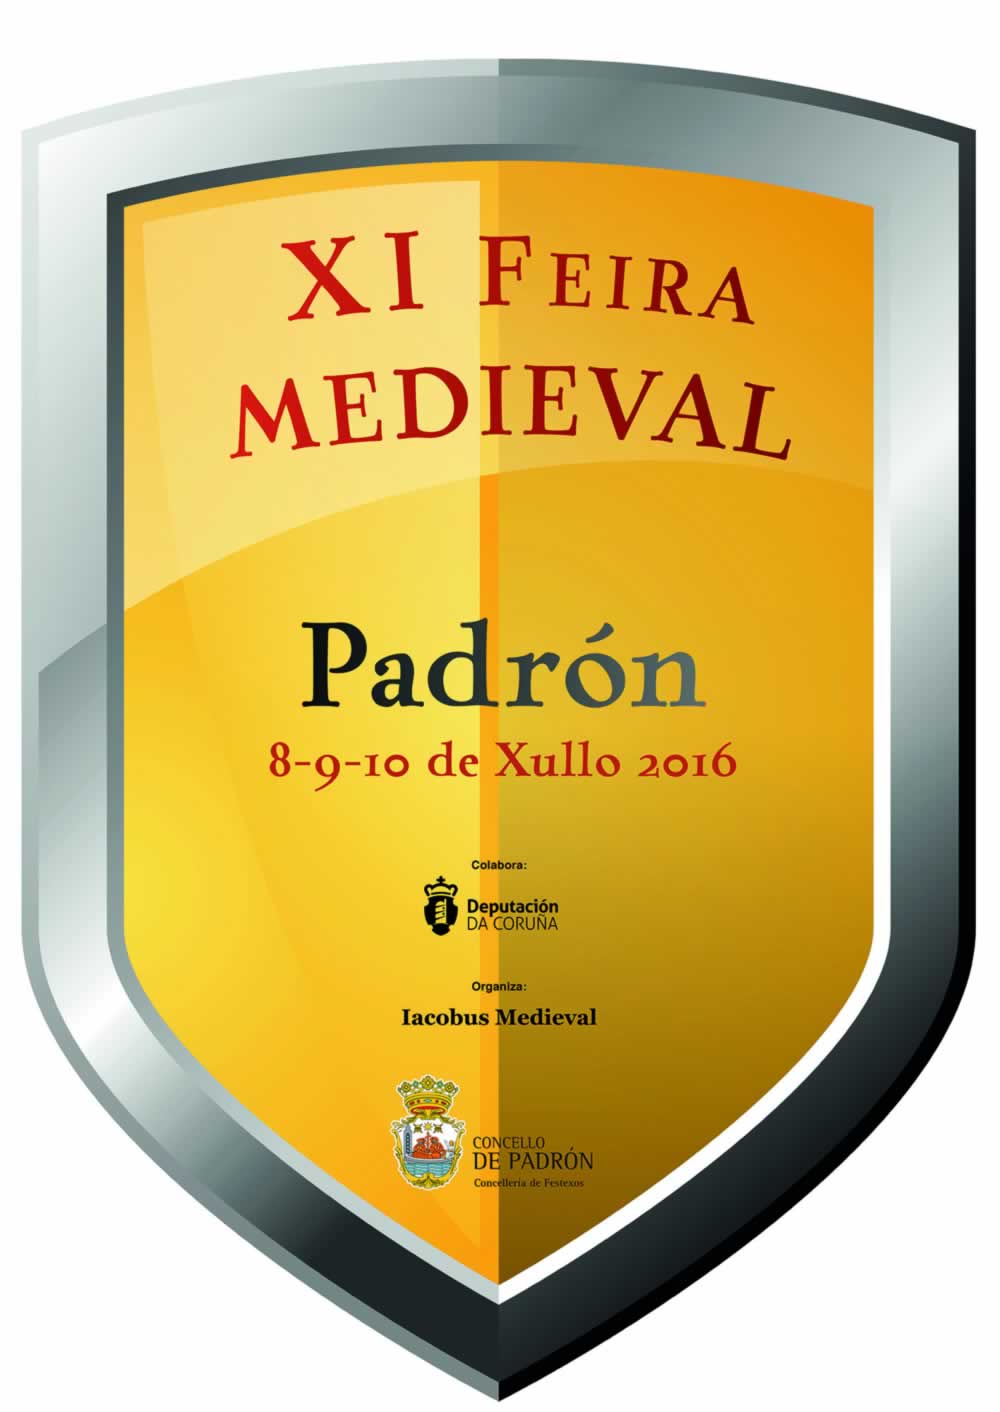 XI Feira medieval en Padron del 08 al 10 de Julio del 2016 – Programacion completa